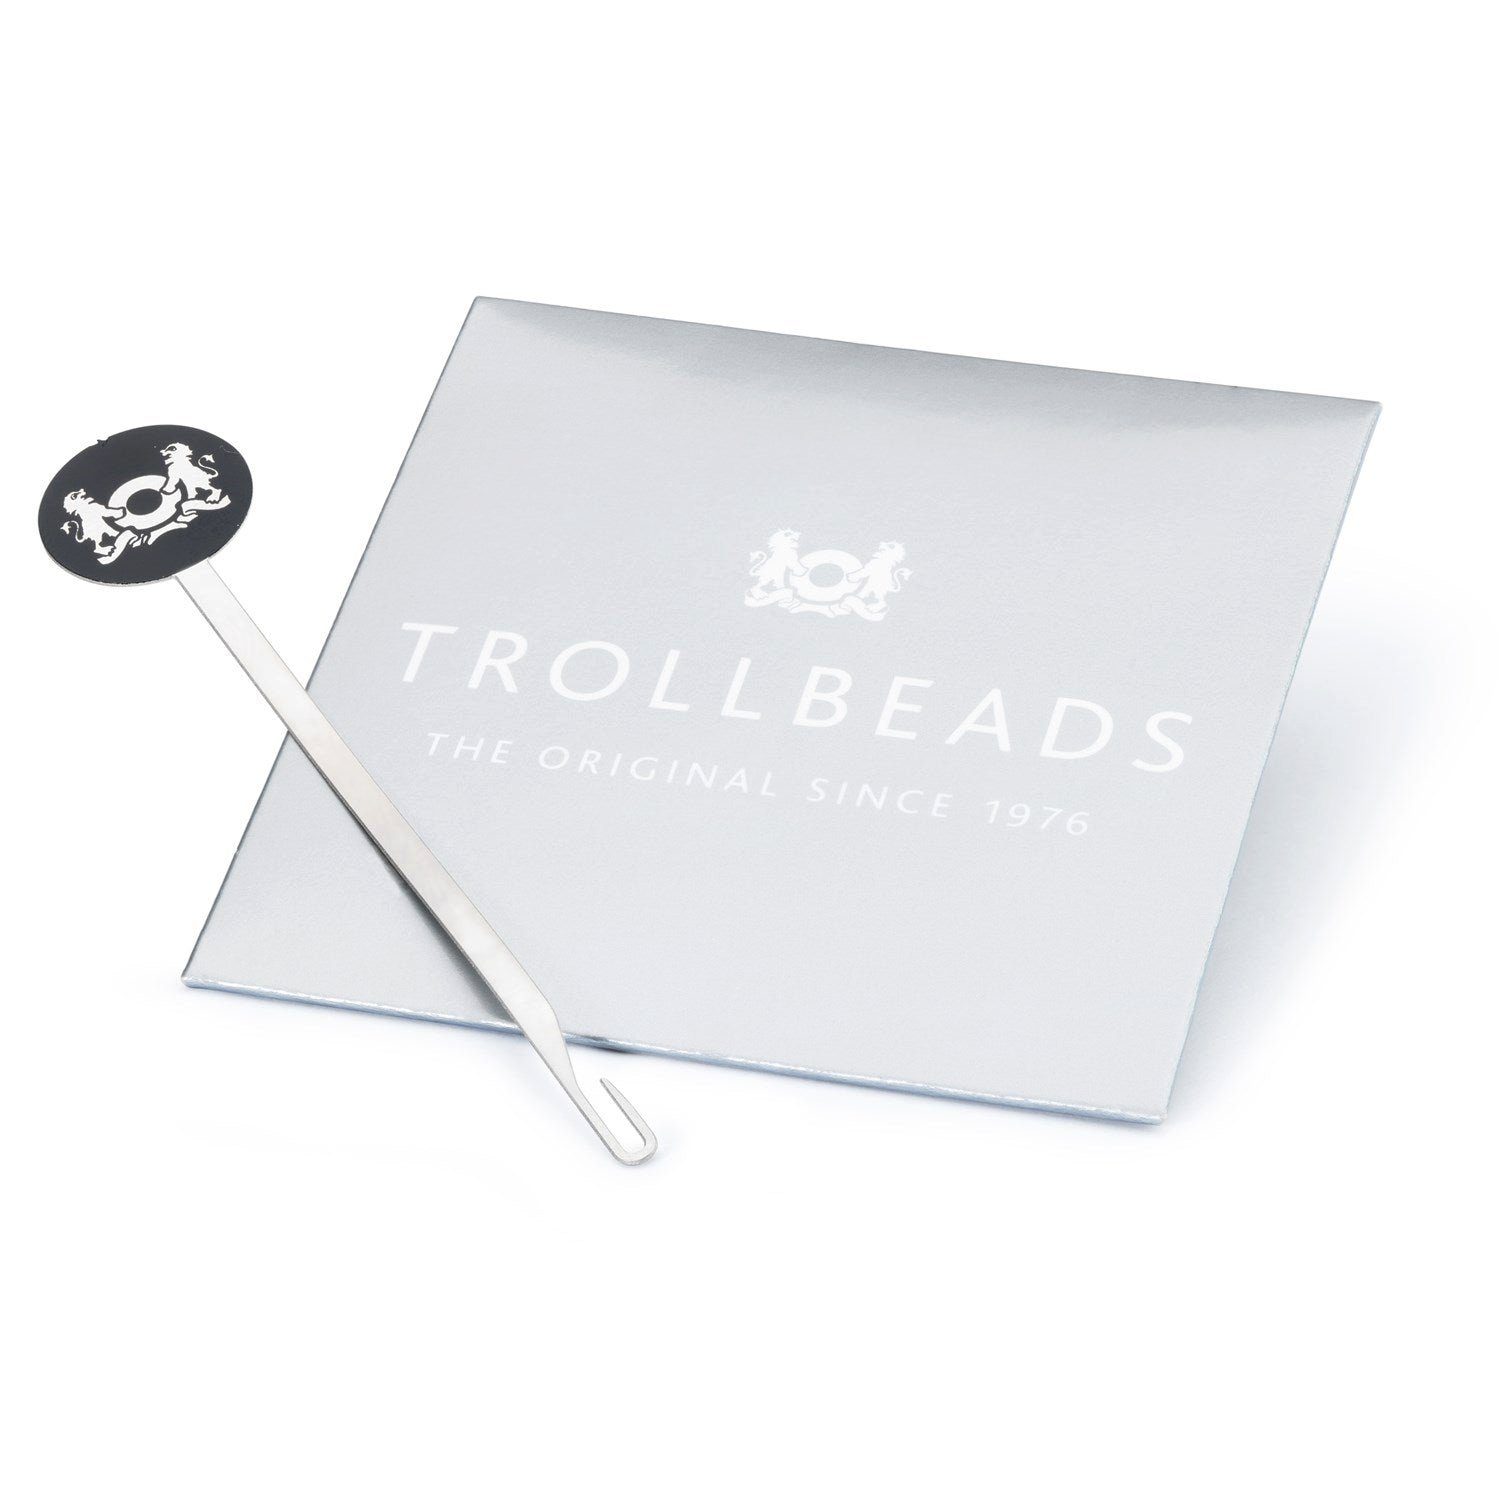 Trollbeads Bead Spacer Tracker - Kettengestaltung Hilfe, TNOBX-00008 | Beads